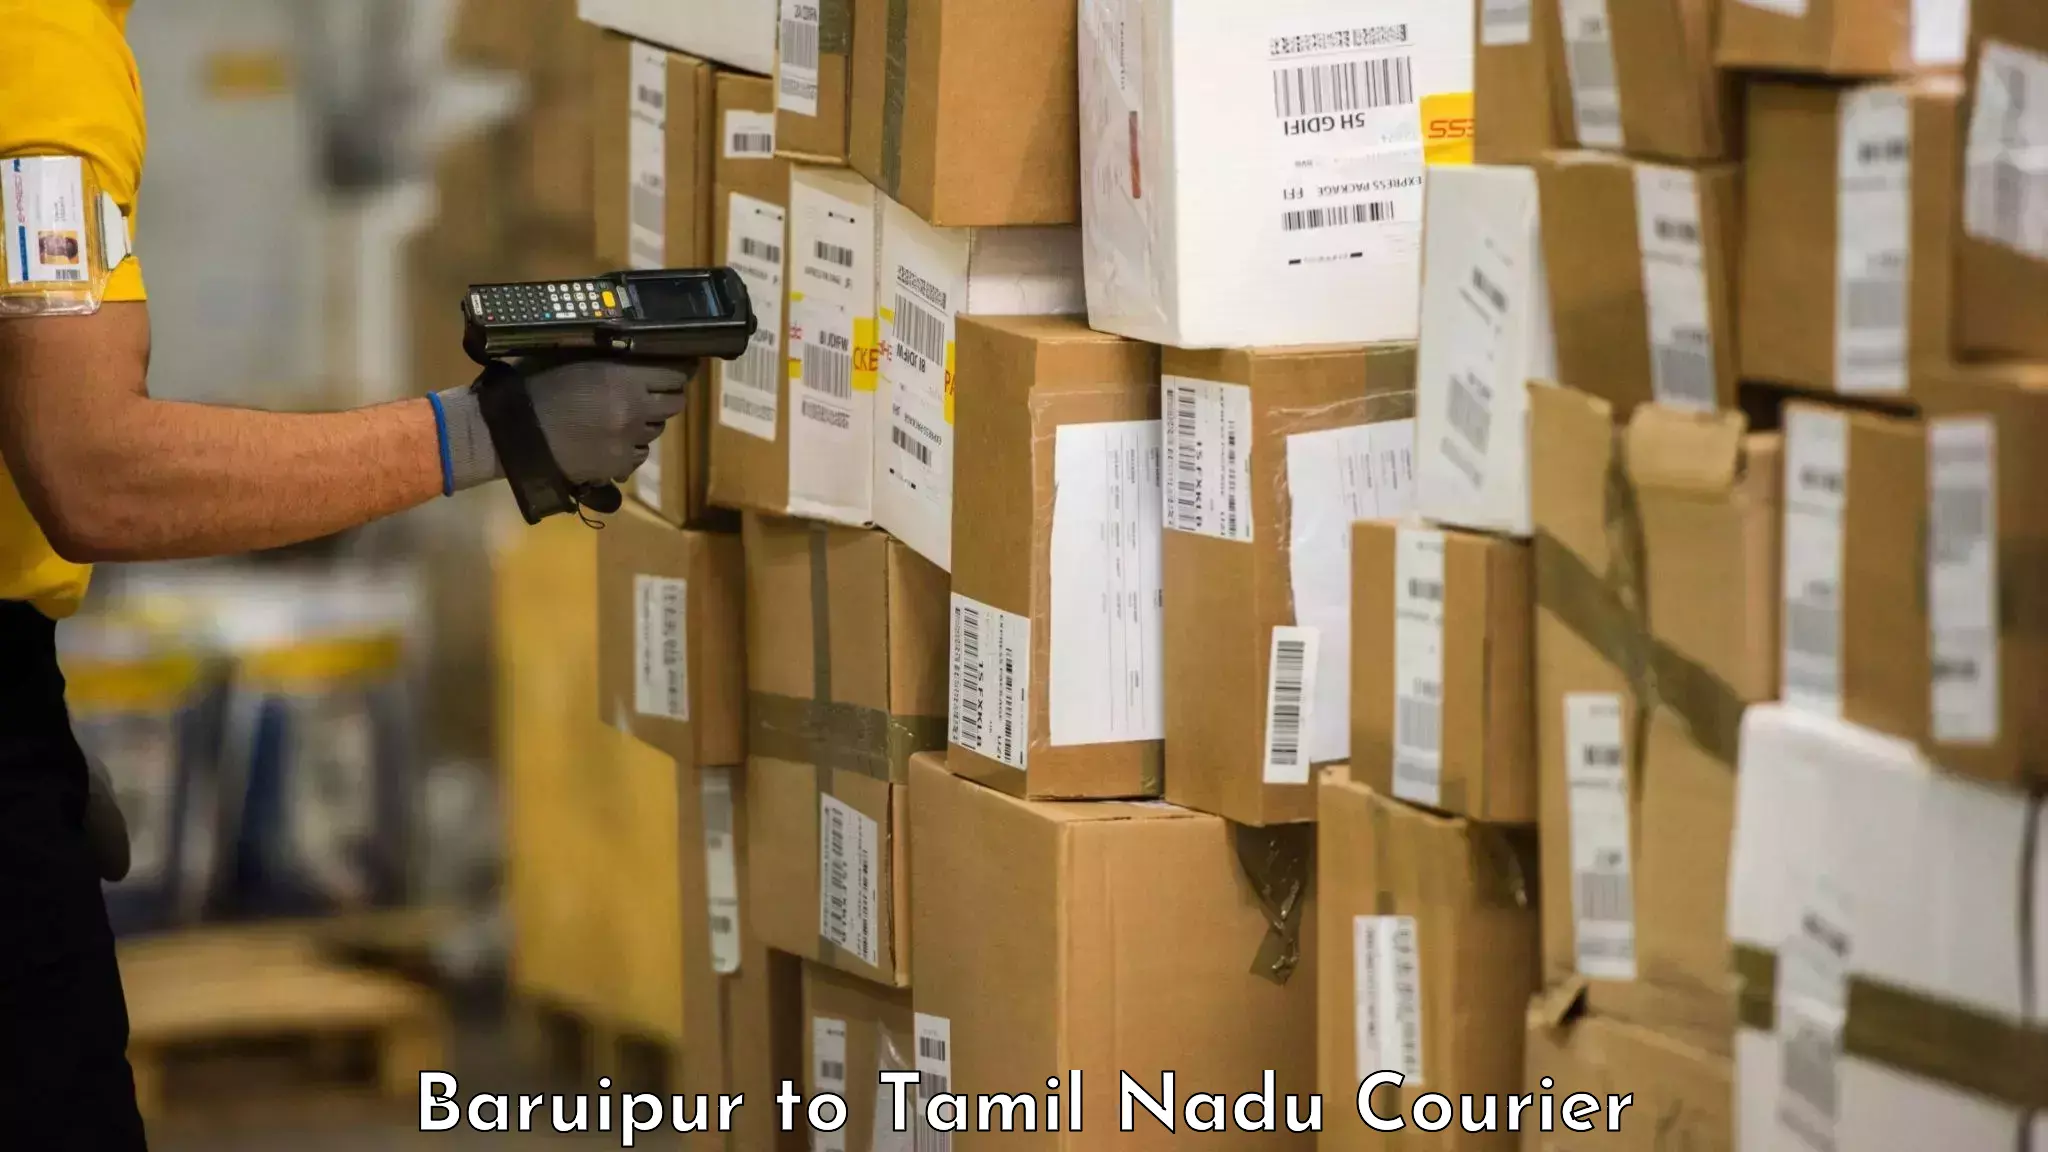 Luggage shipment specialists Baruipur to Tamil Nadu